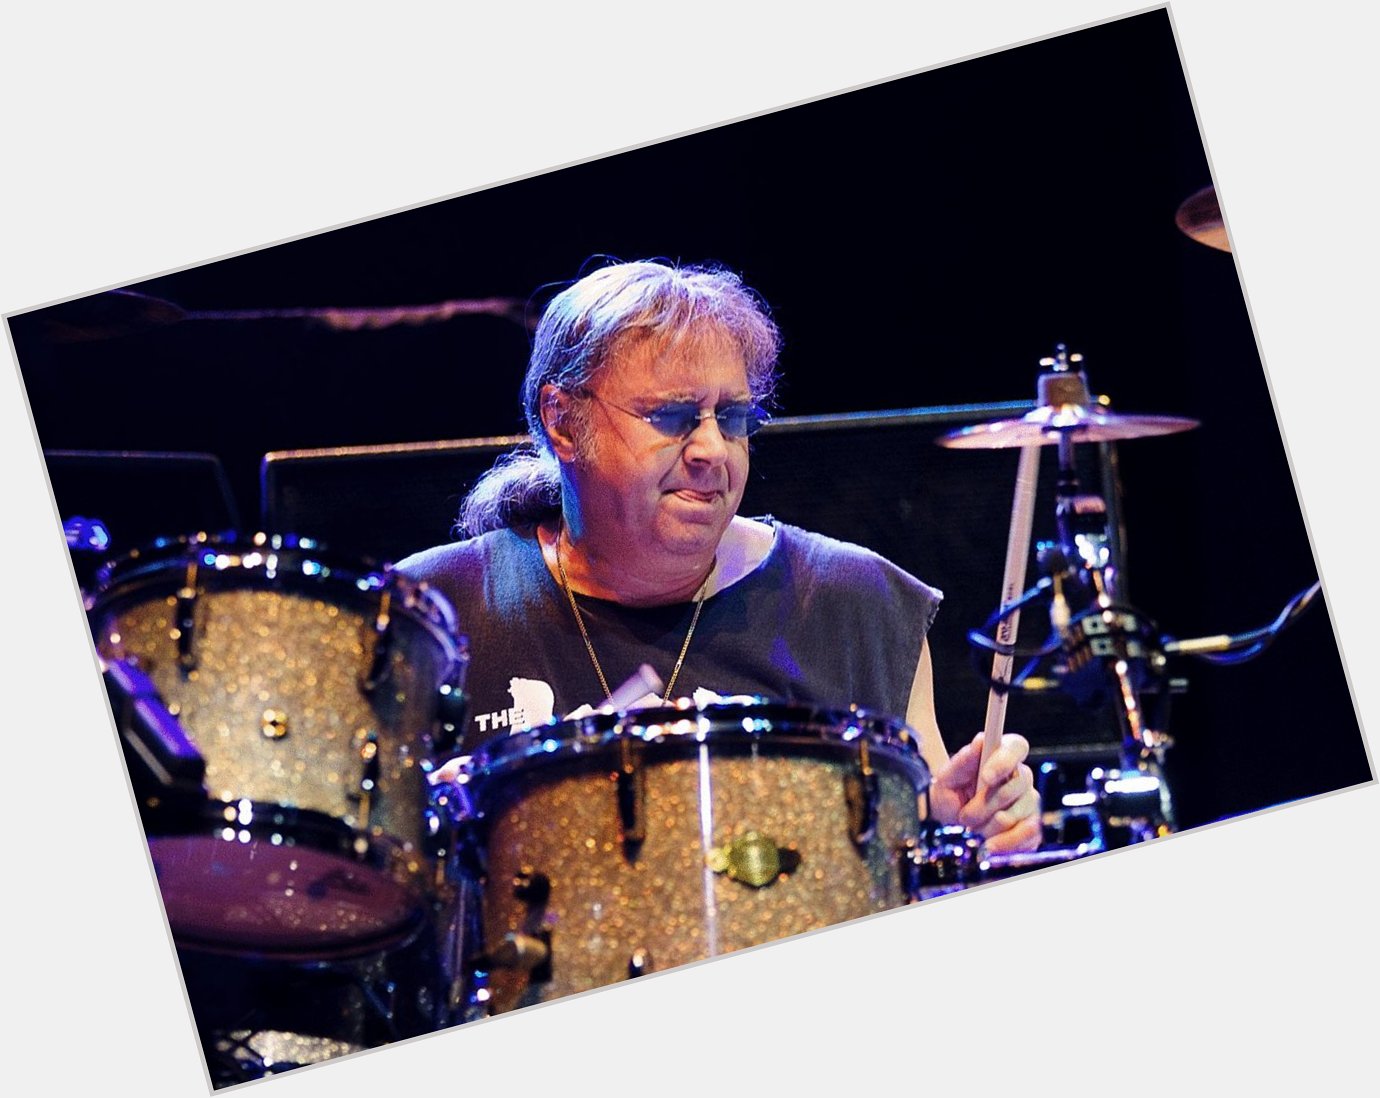 Happy Birthday to Ian Paice, drummer for Deep Purple, born June 29th 1948 